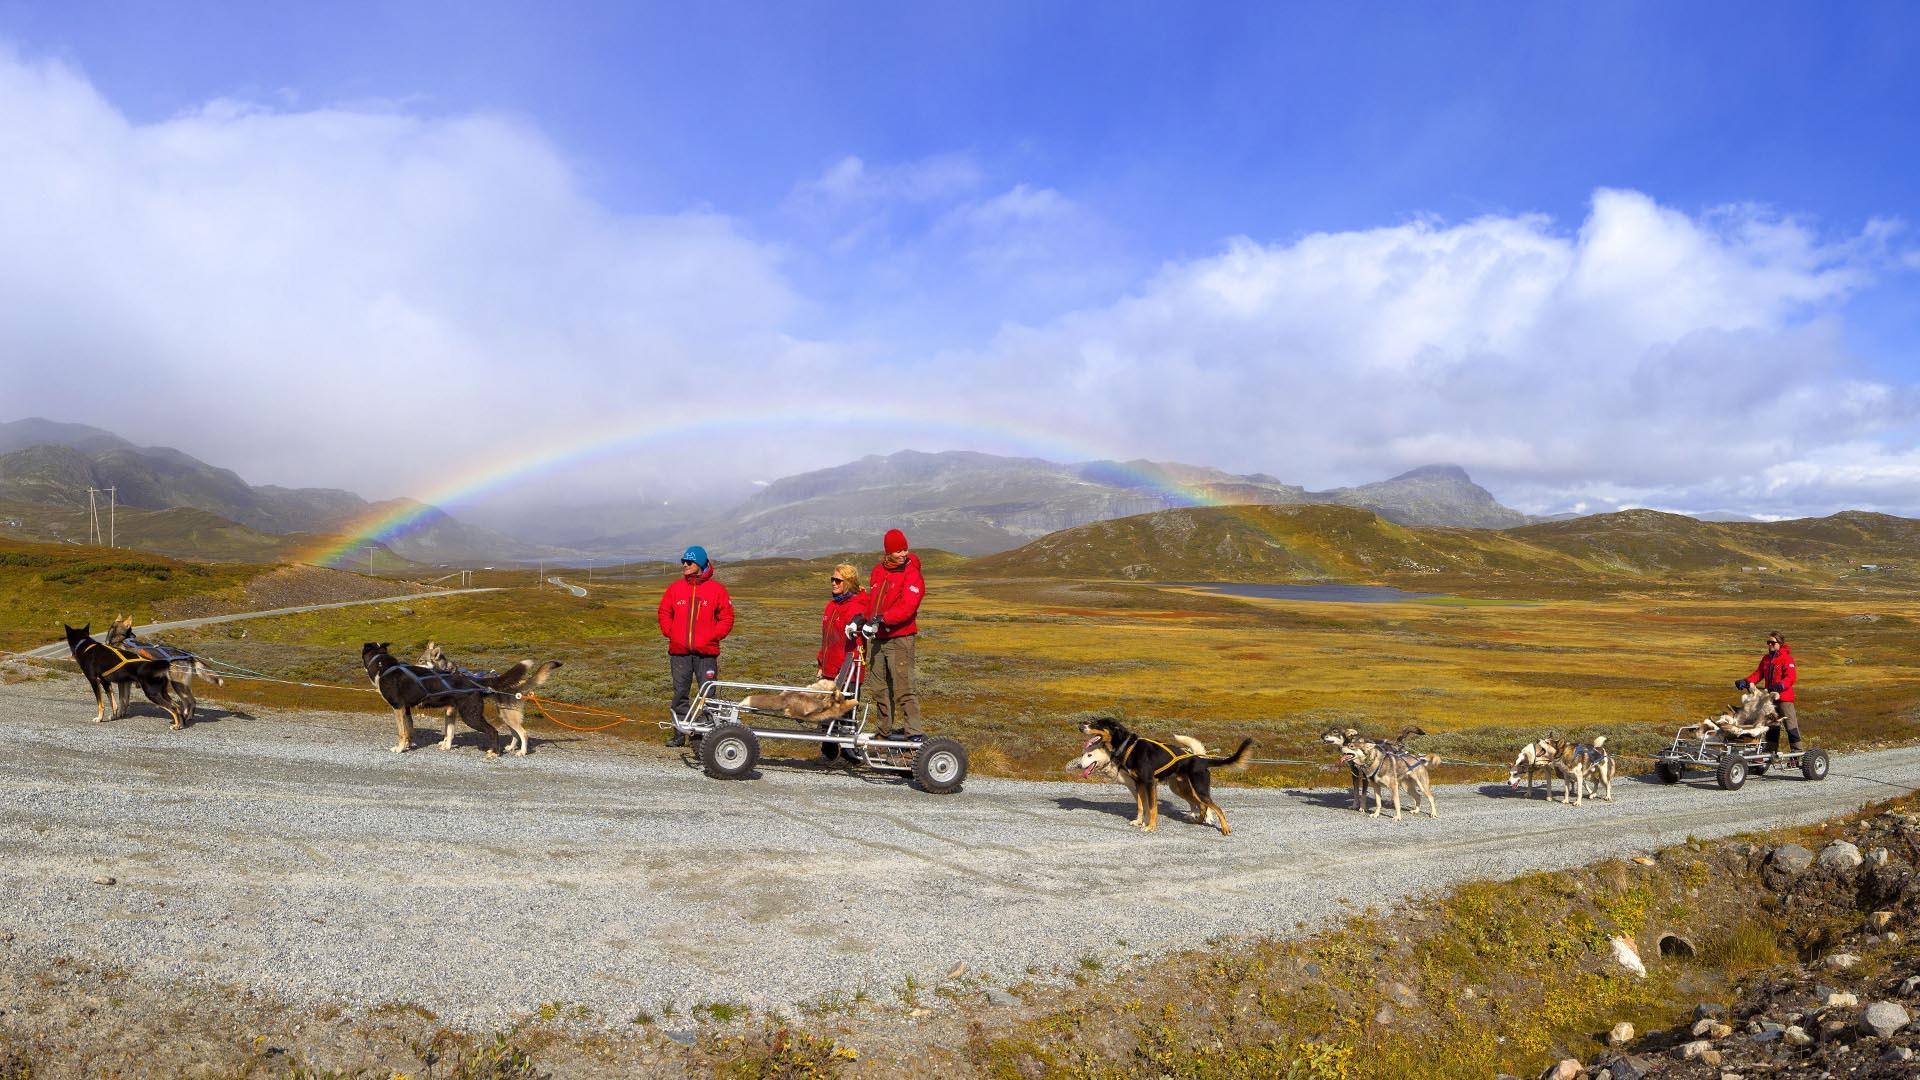 A dog sledding team with a cart on wheels on a gravel road amidst a autumn-coloured mountain landscape with a rainbow